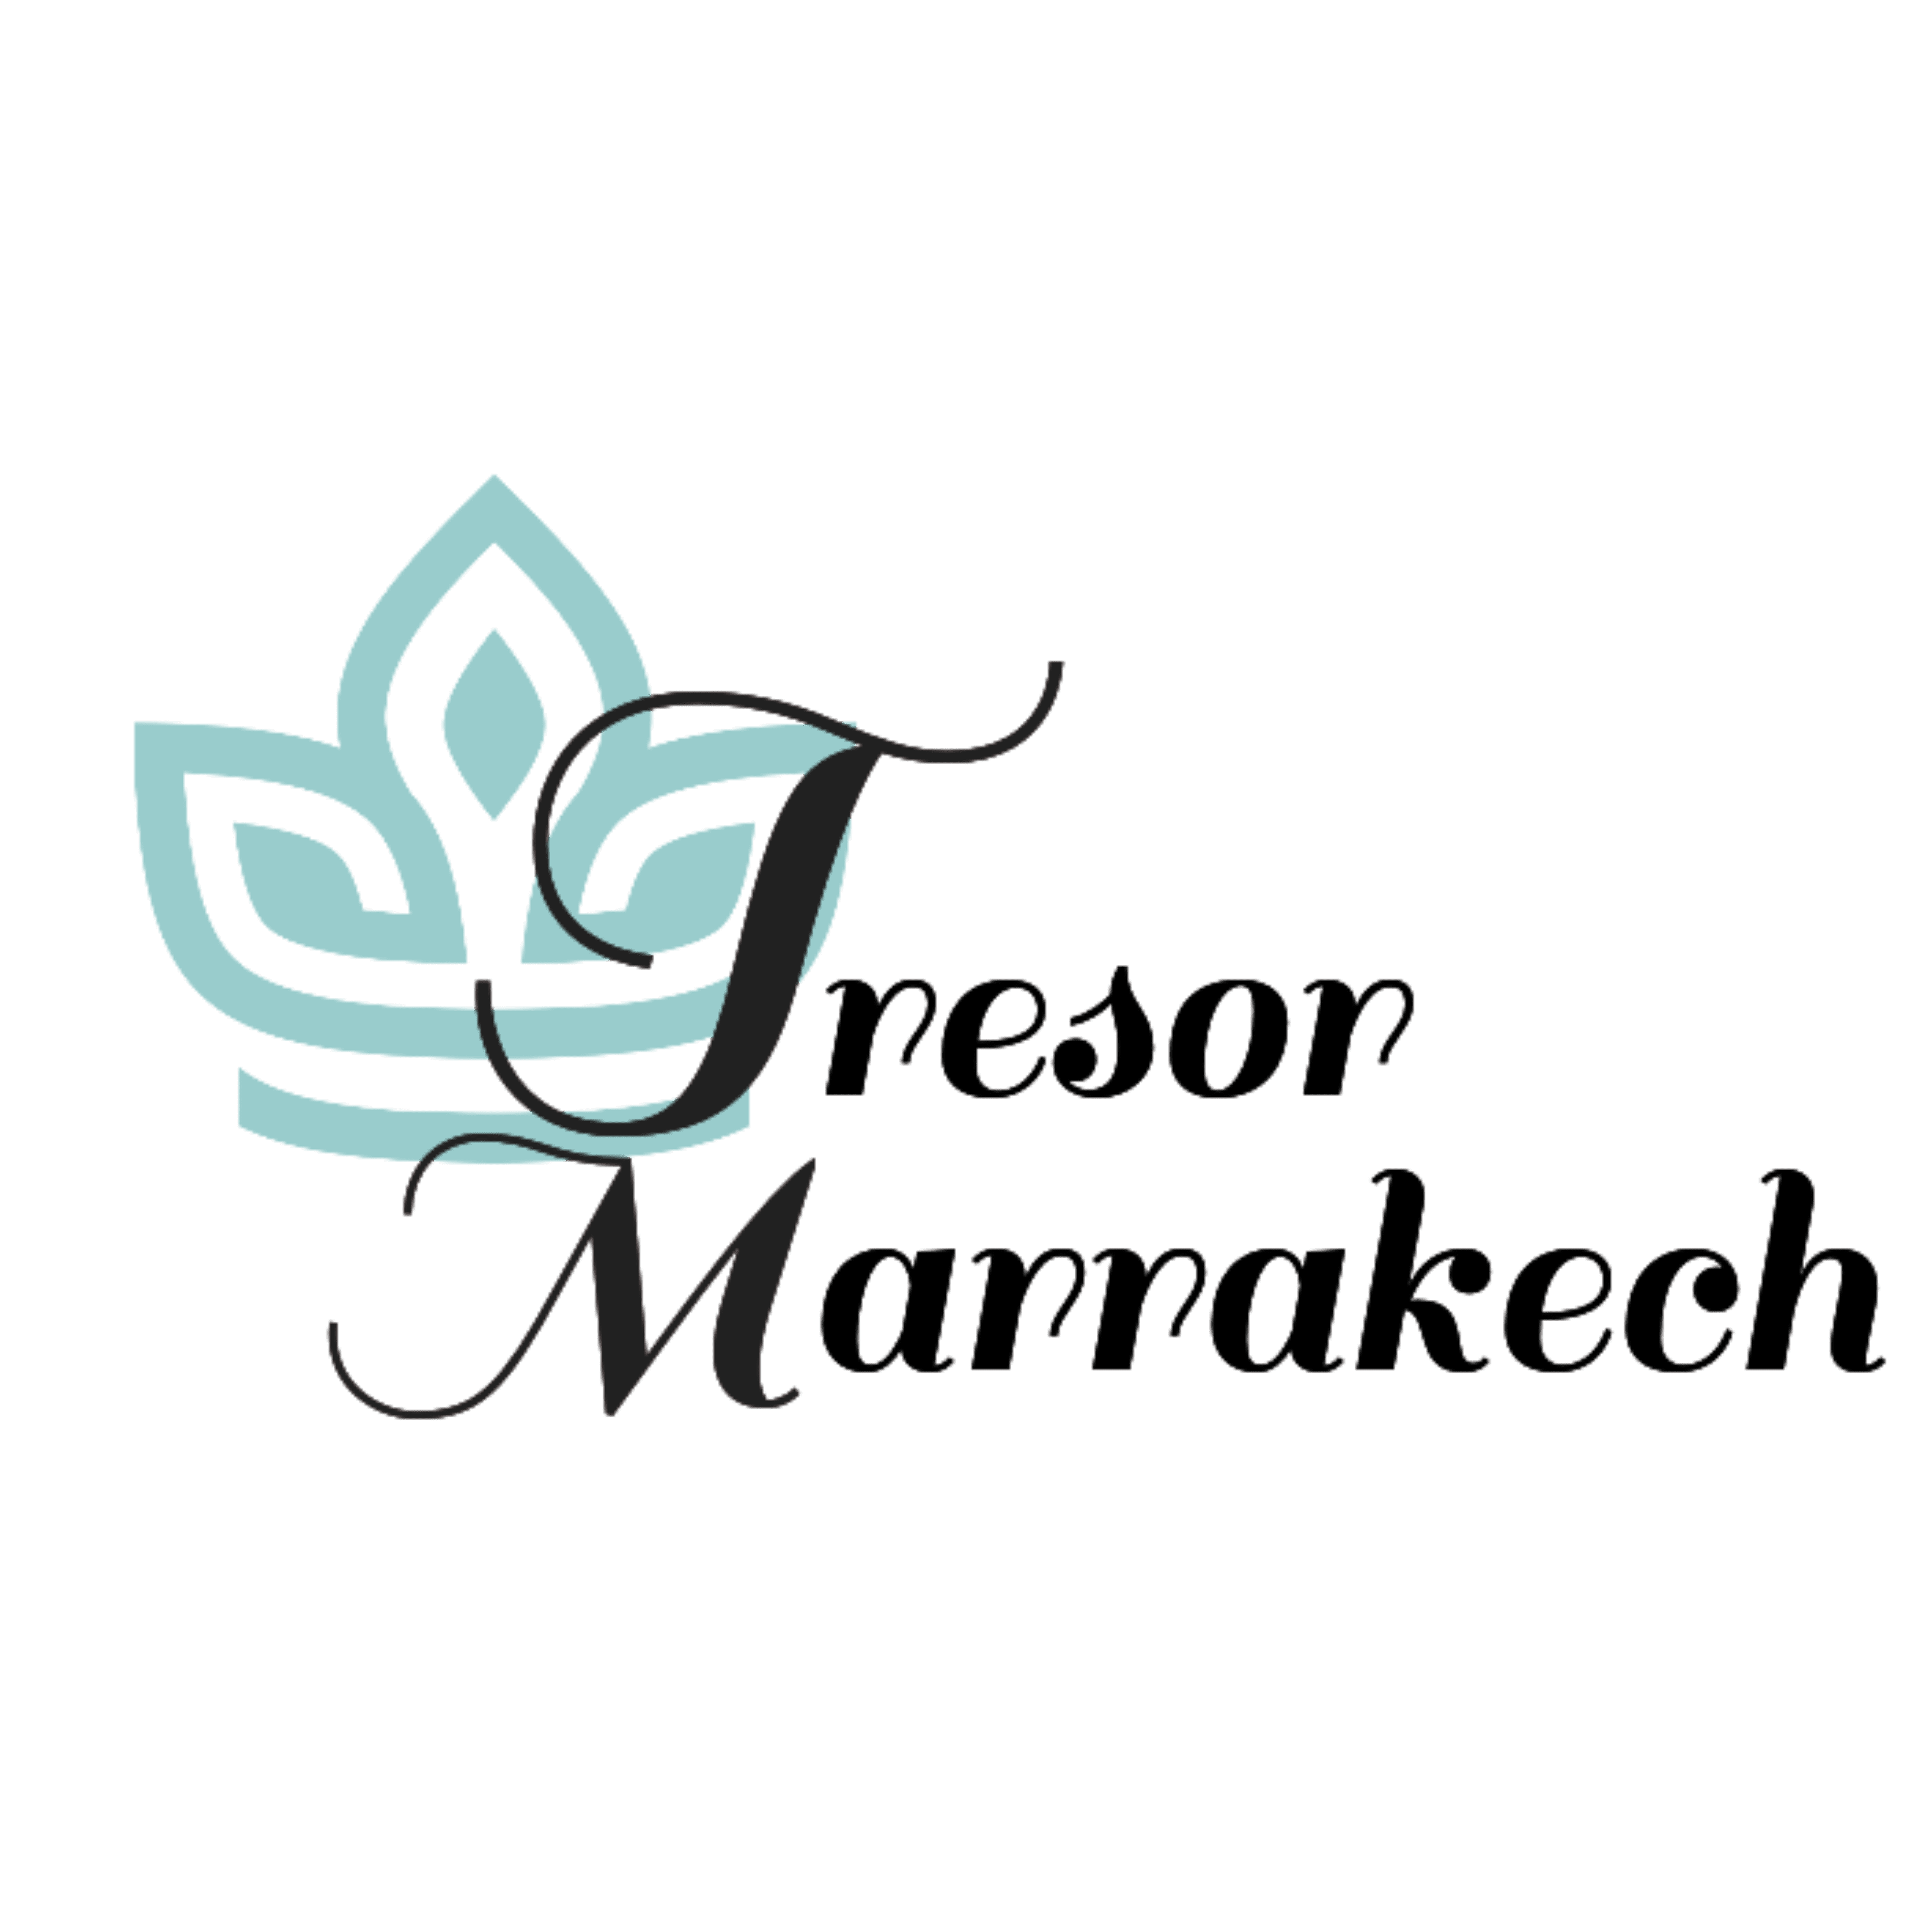 Tresor Marrakech